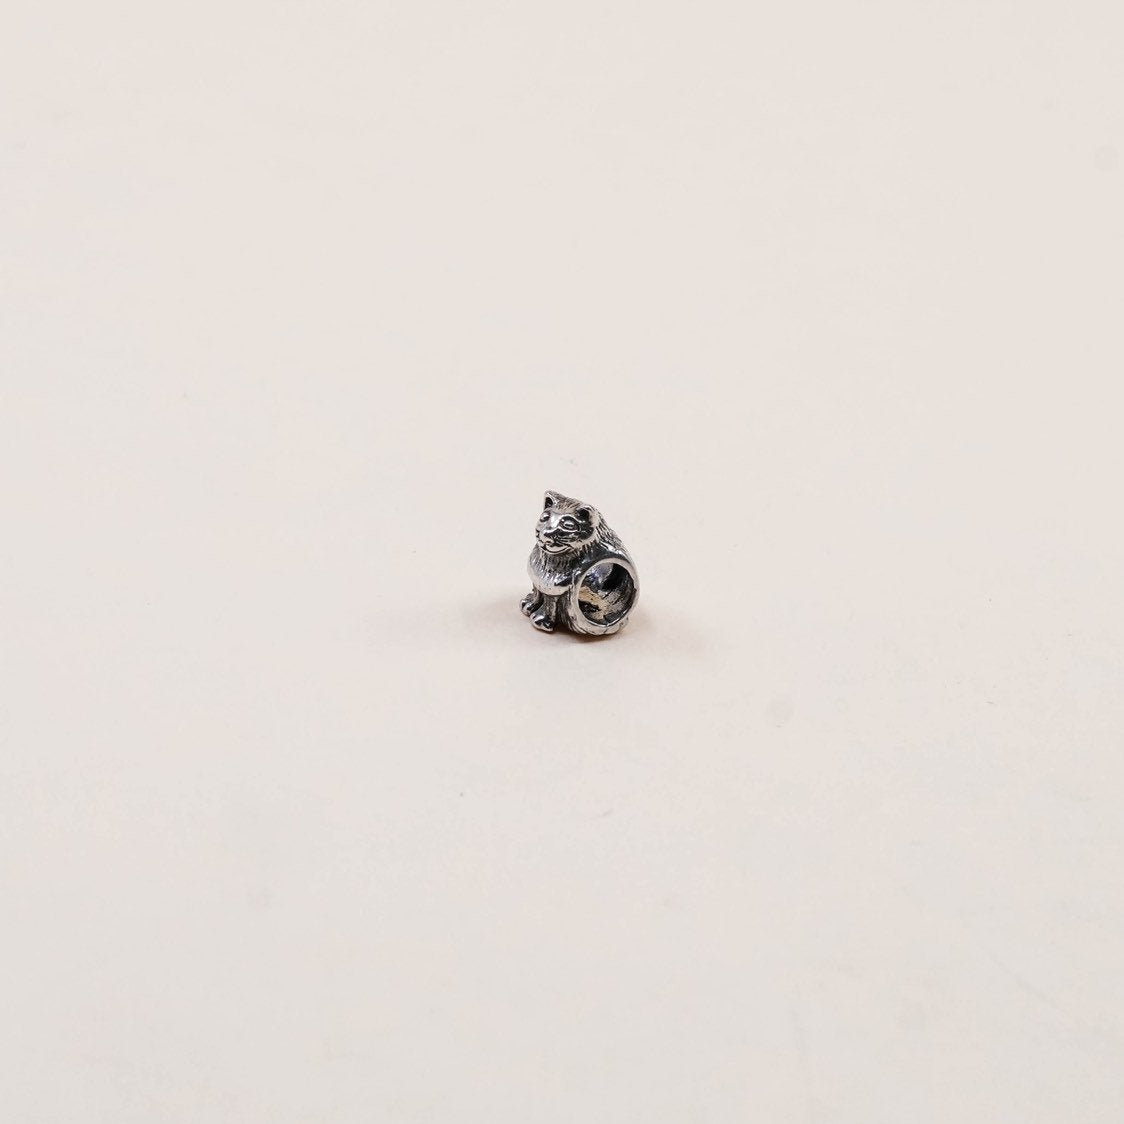 VTG sterling silver handmade pendant, 925 lonely hugging cat bead charm